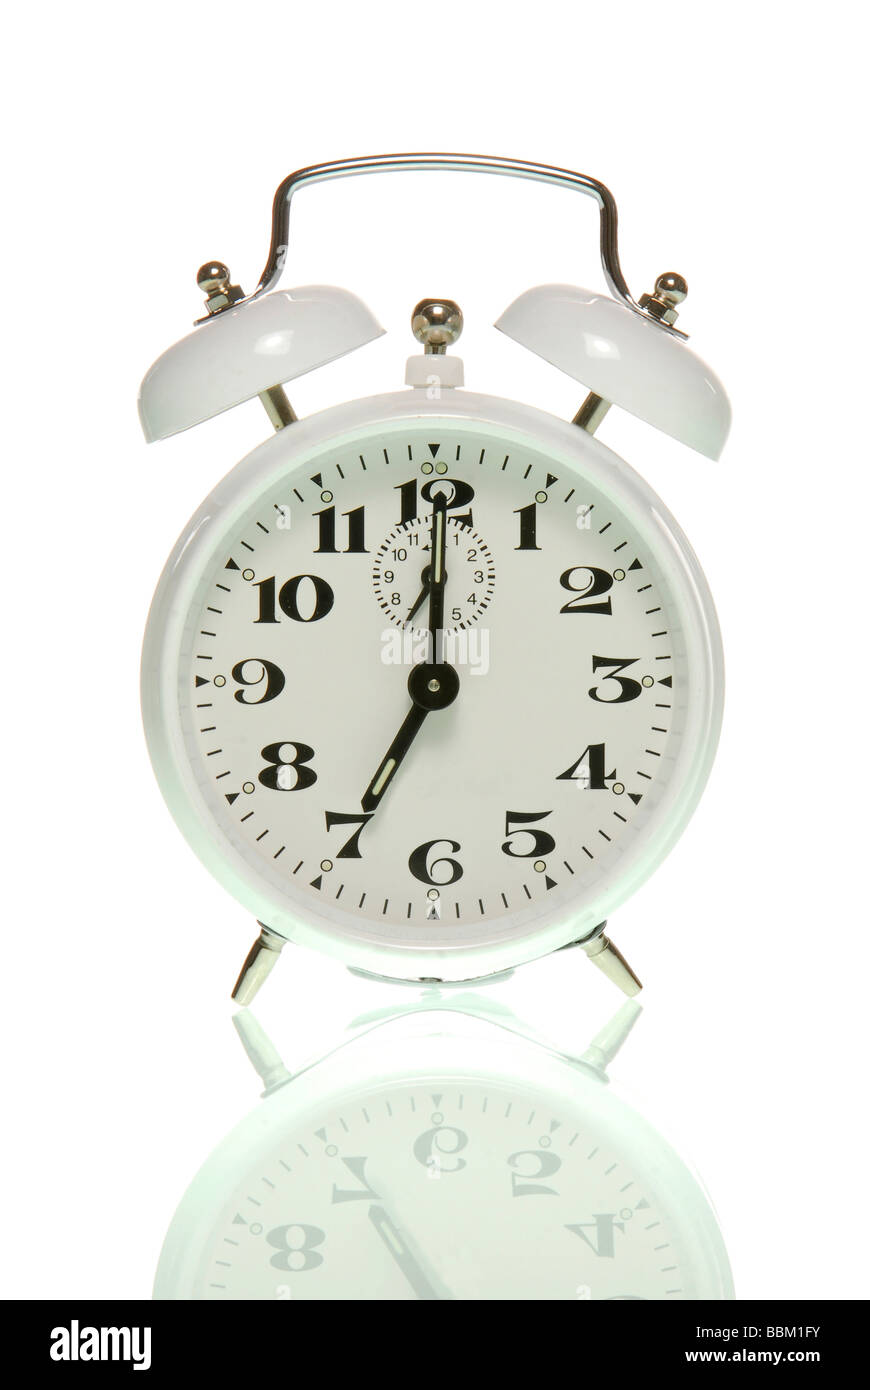 Alarm clock showing seven o'clock Stock Photo